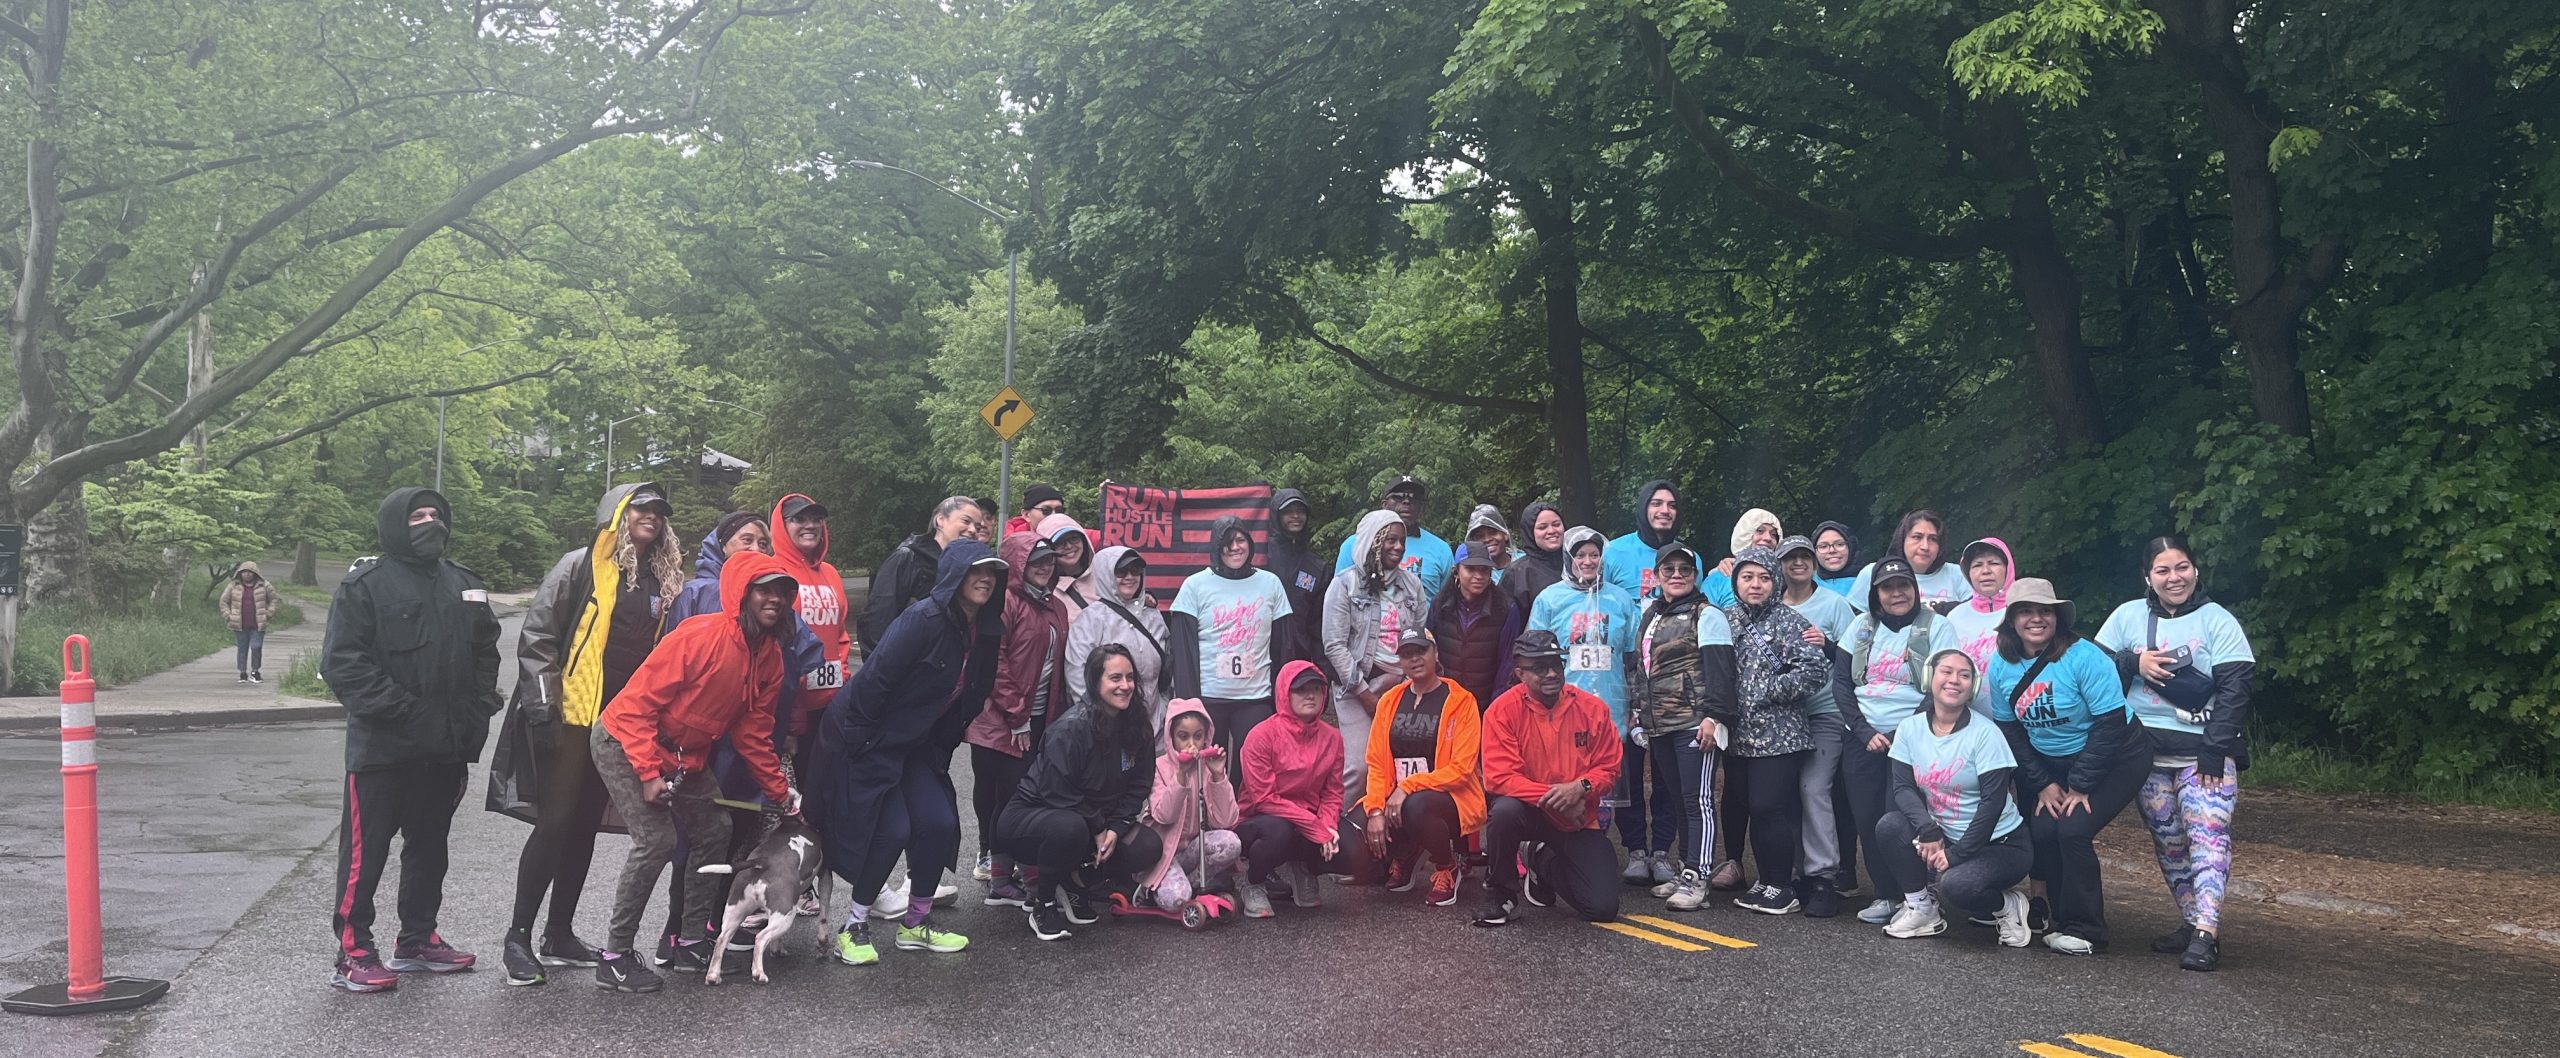 Big Turnout for Mother’s Day 5K at Forest Park Despite Rain